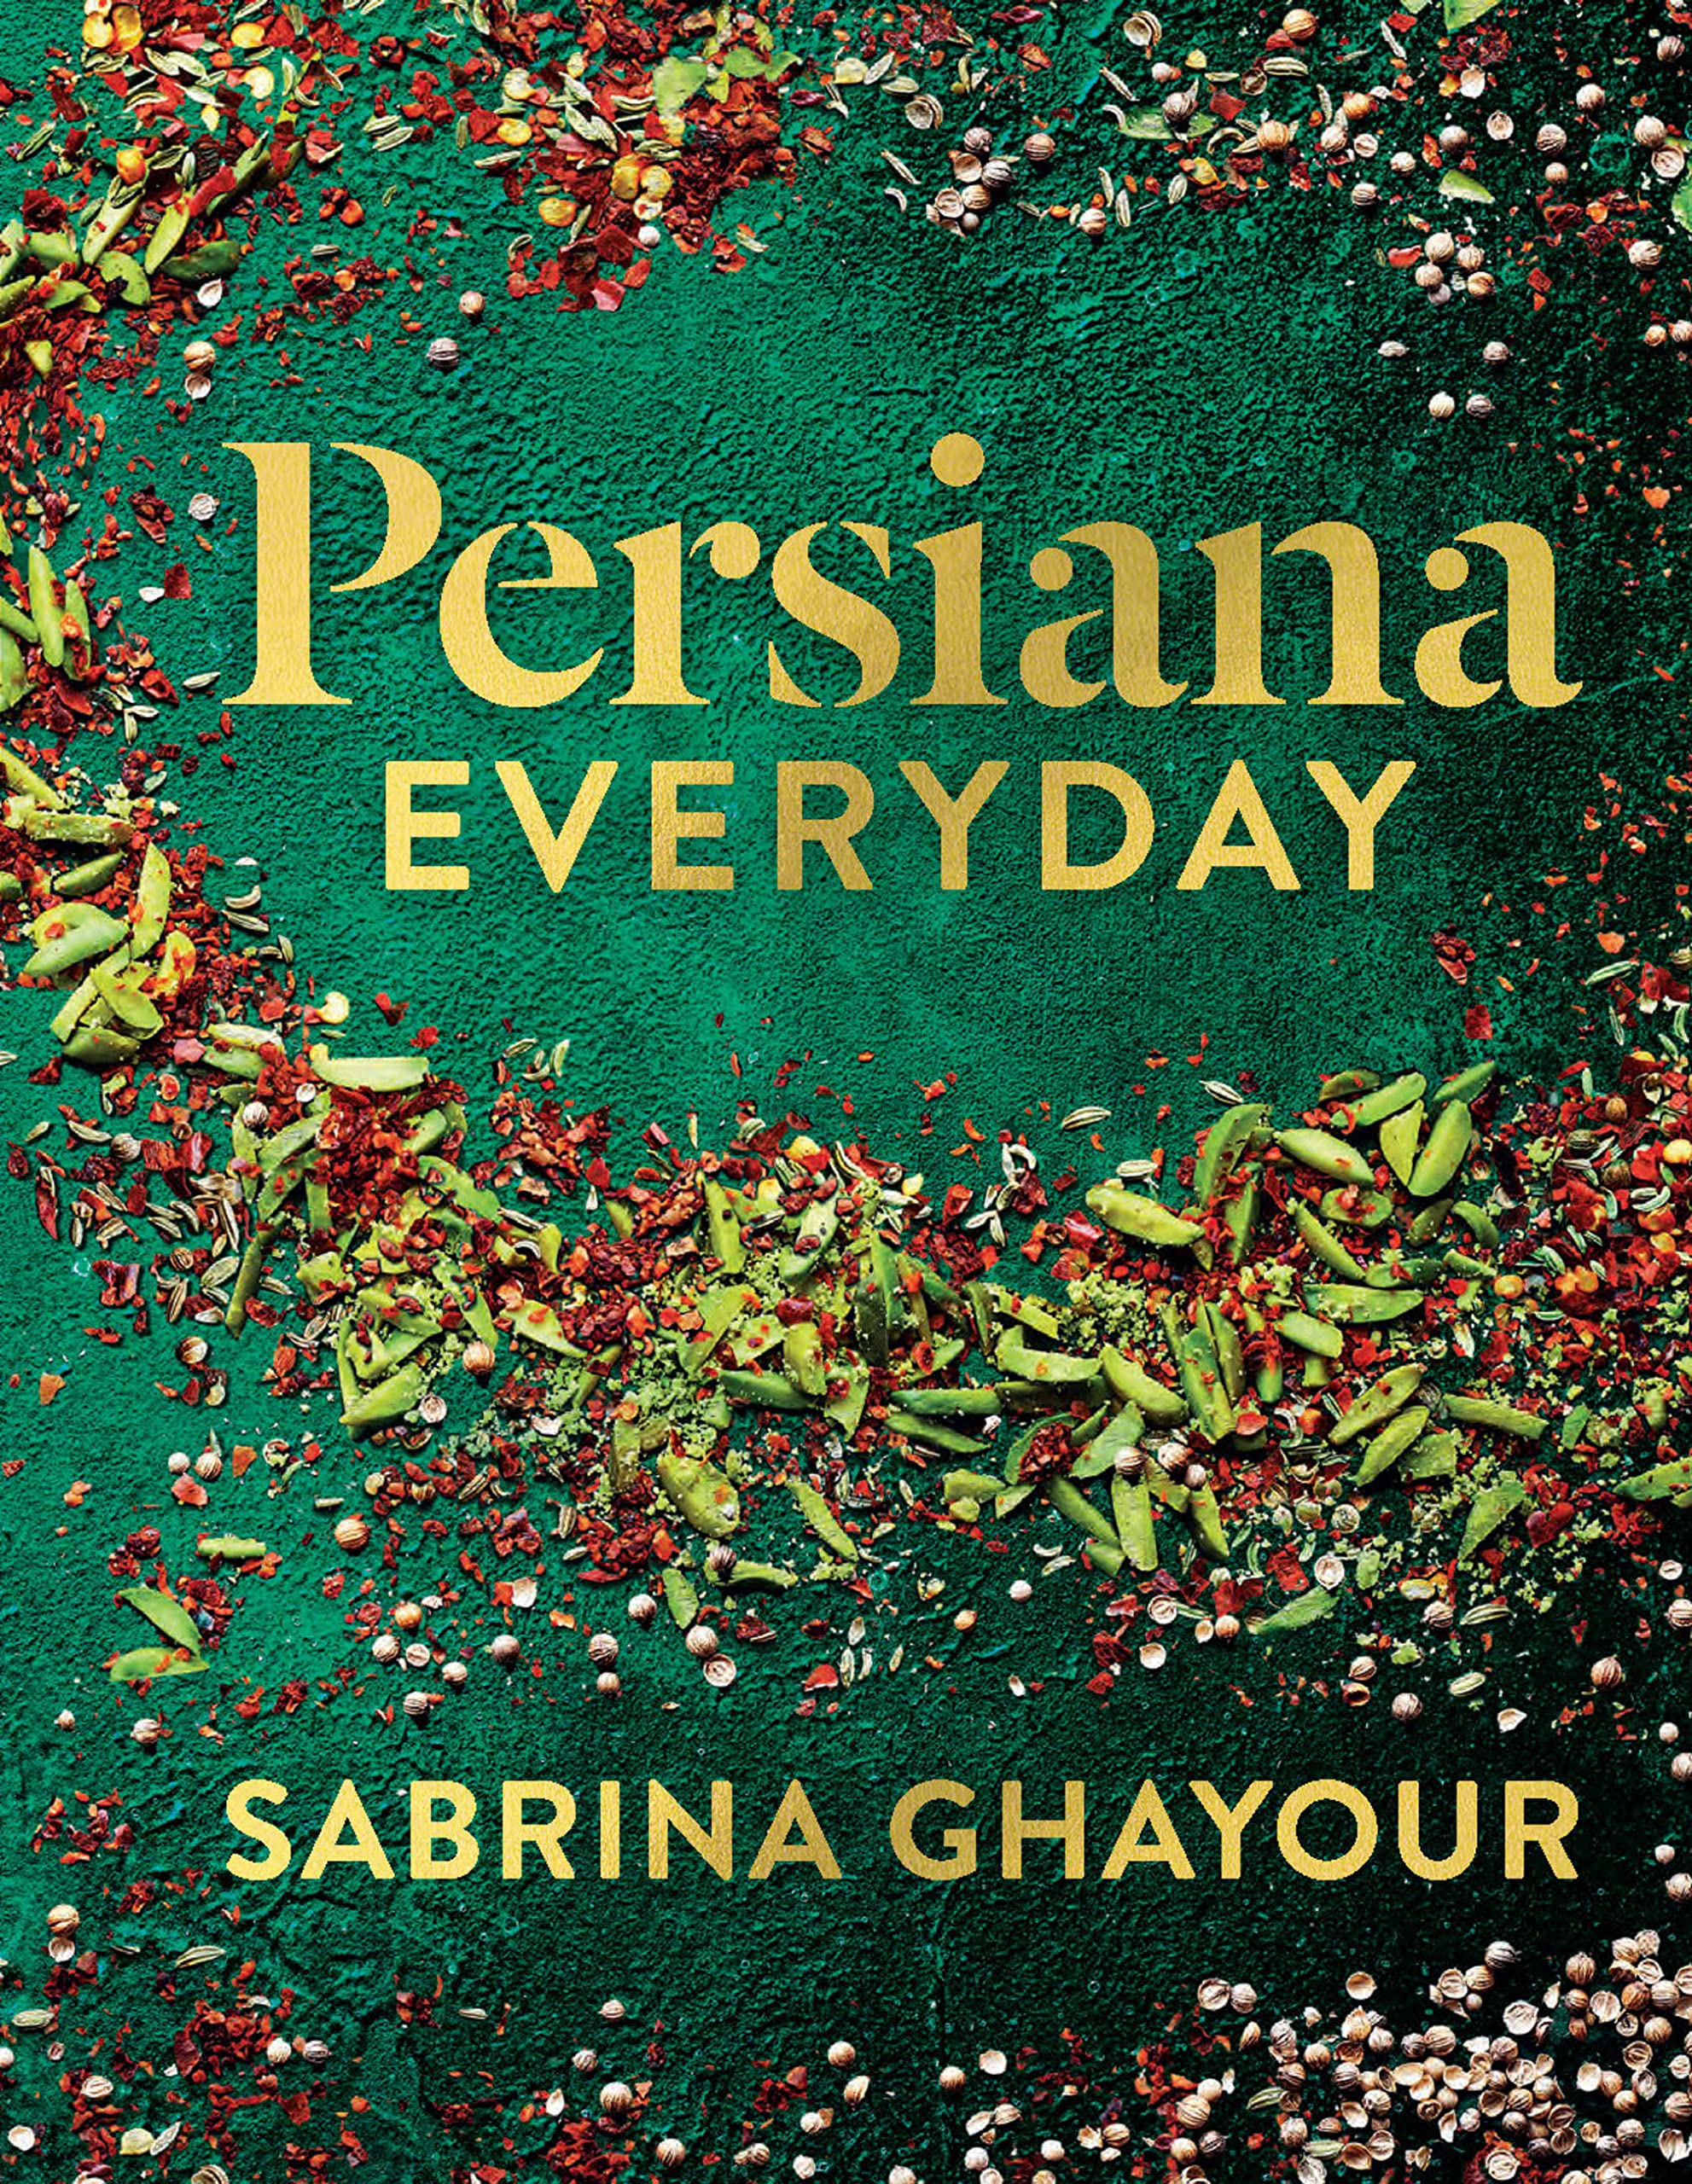 Persiana Everyday (Sabrina Ghayour)